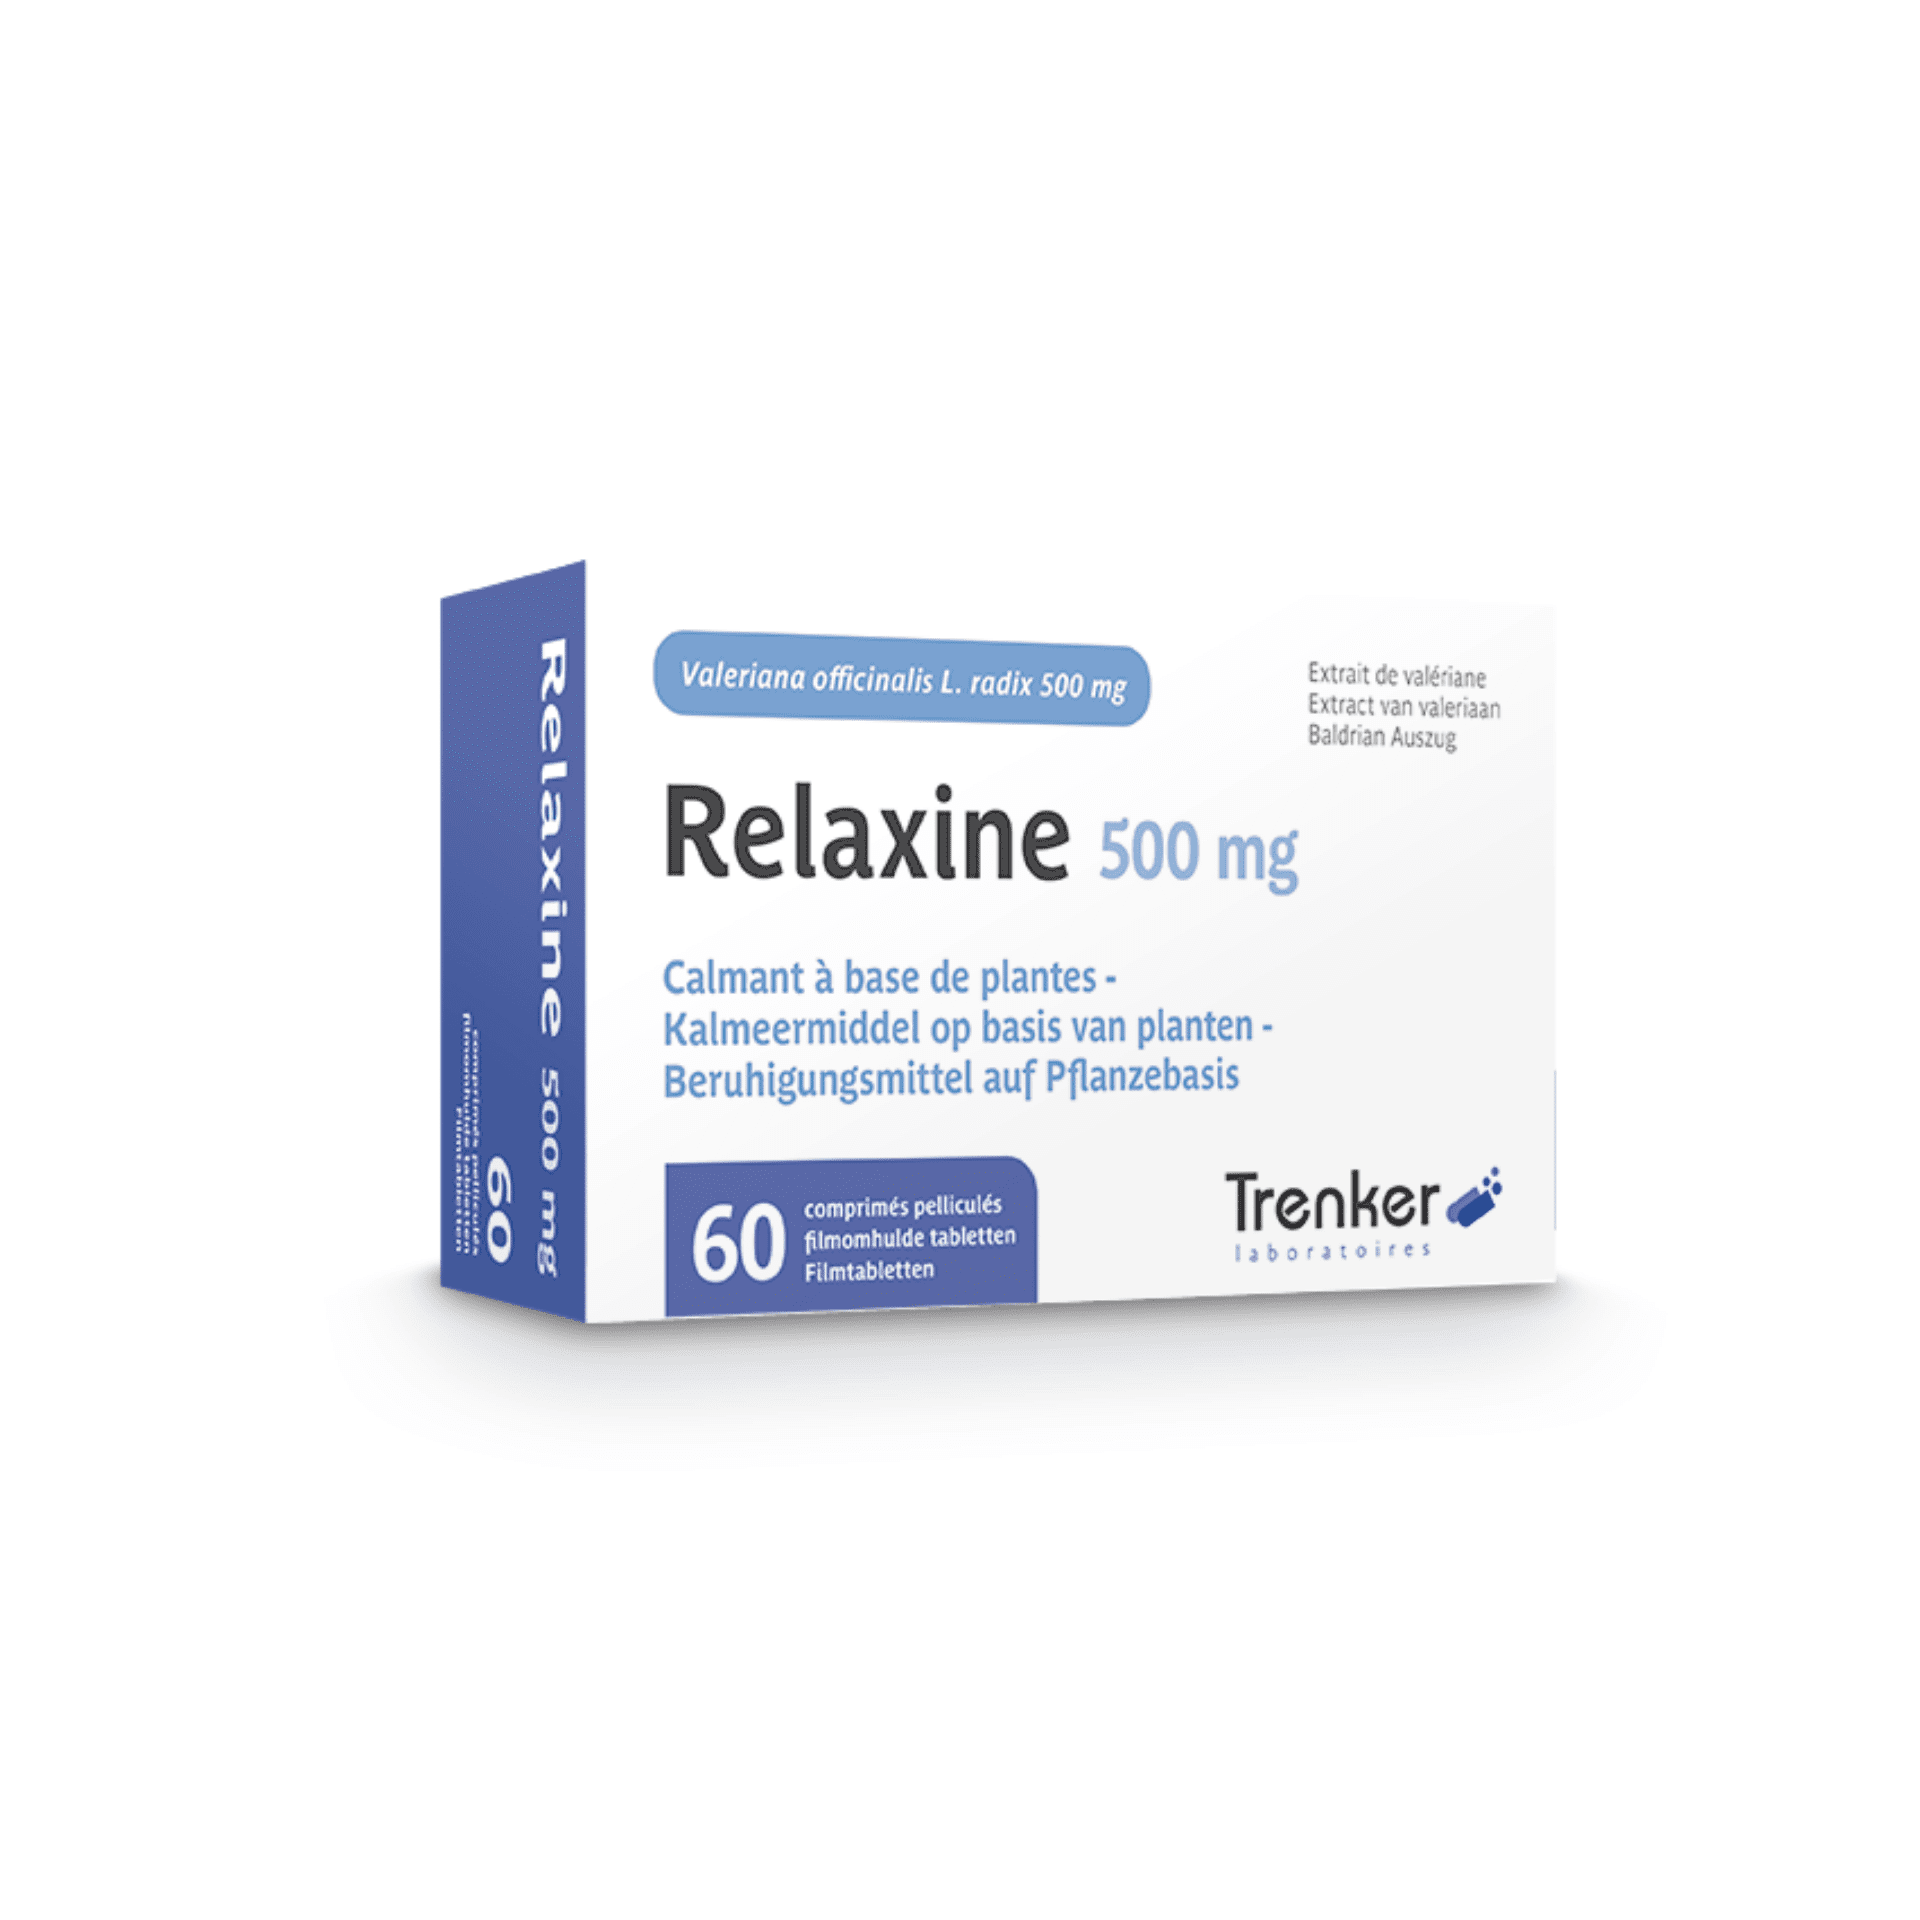 Relaxine 500 mg